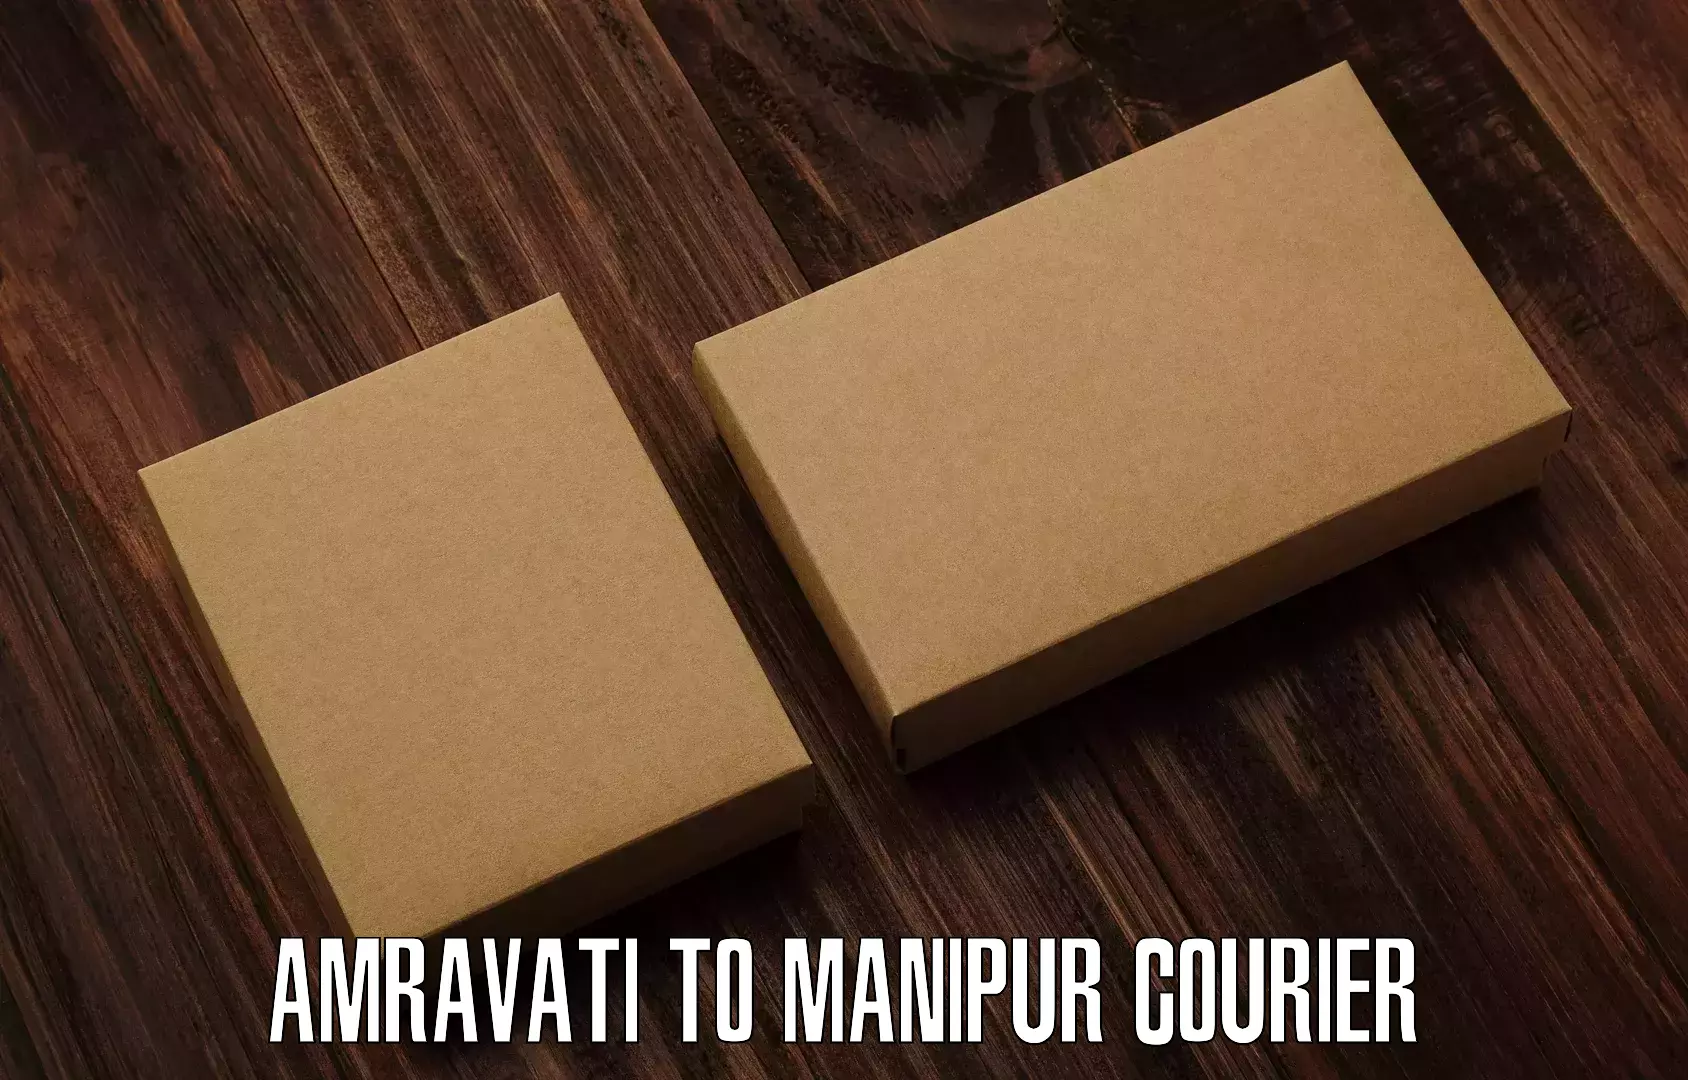 Courier service innovation Amravati to Manipur